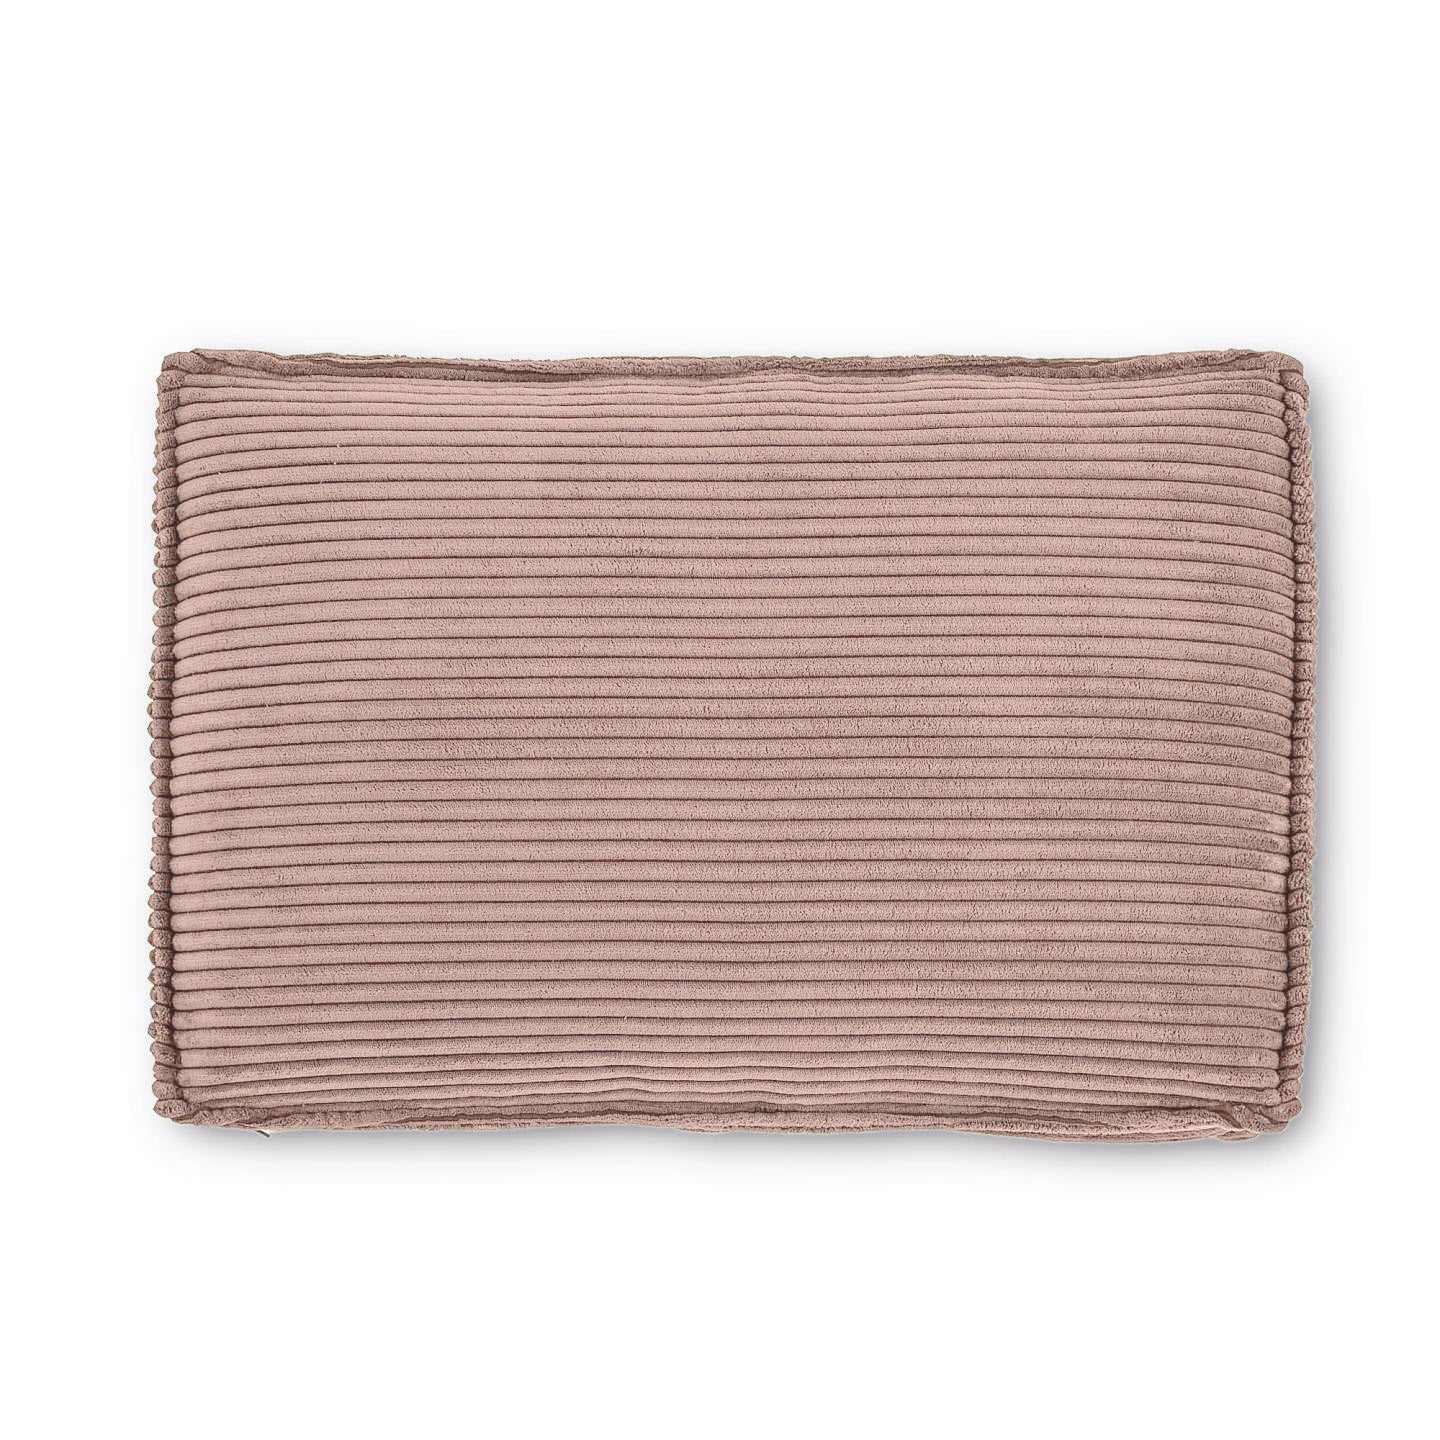 Blok cushion in pink wide seam corduroy, 40 x 60 cm